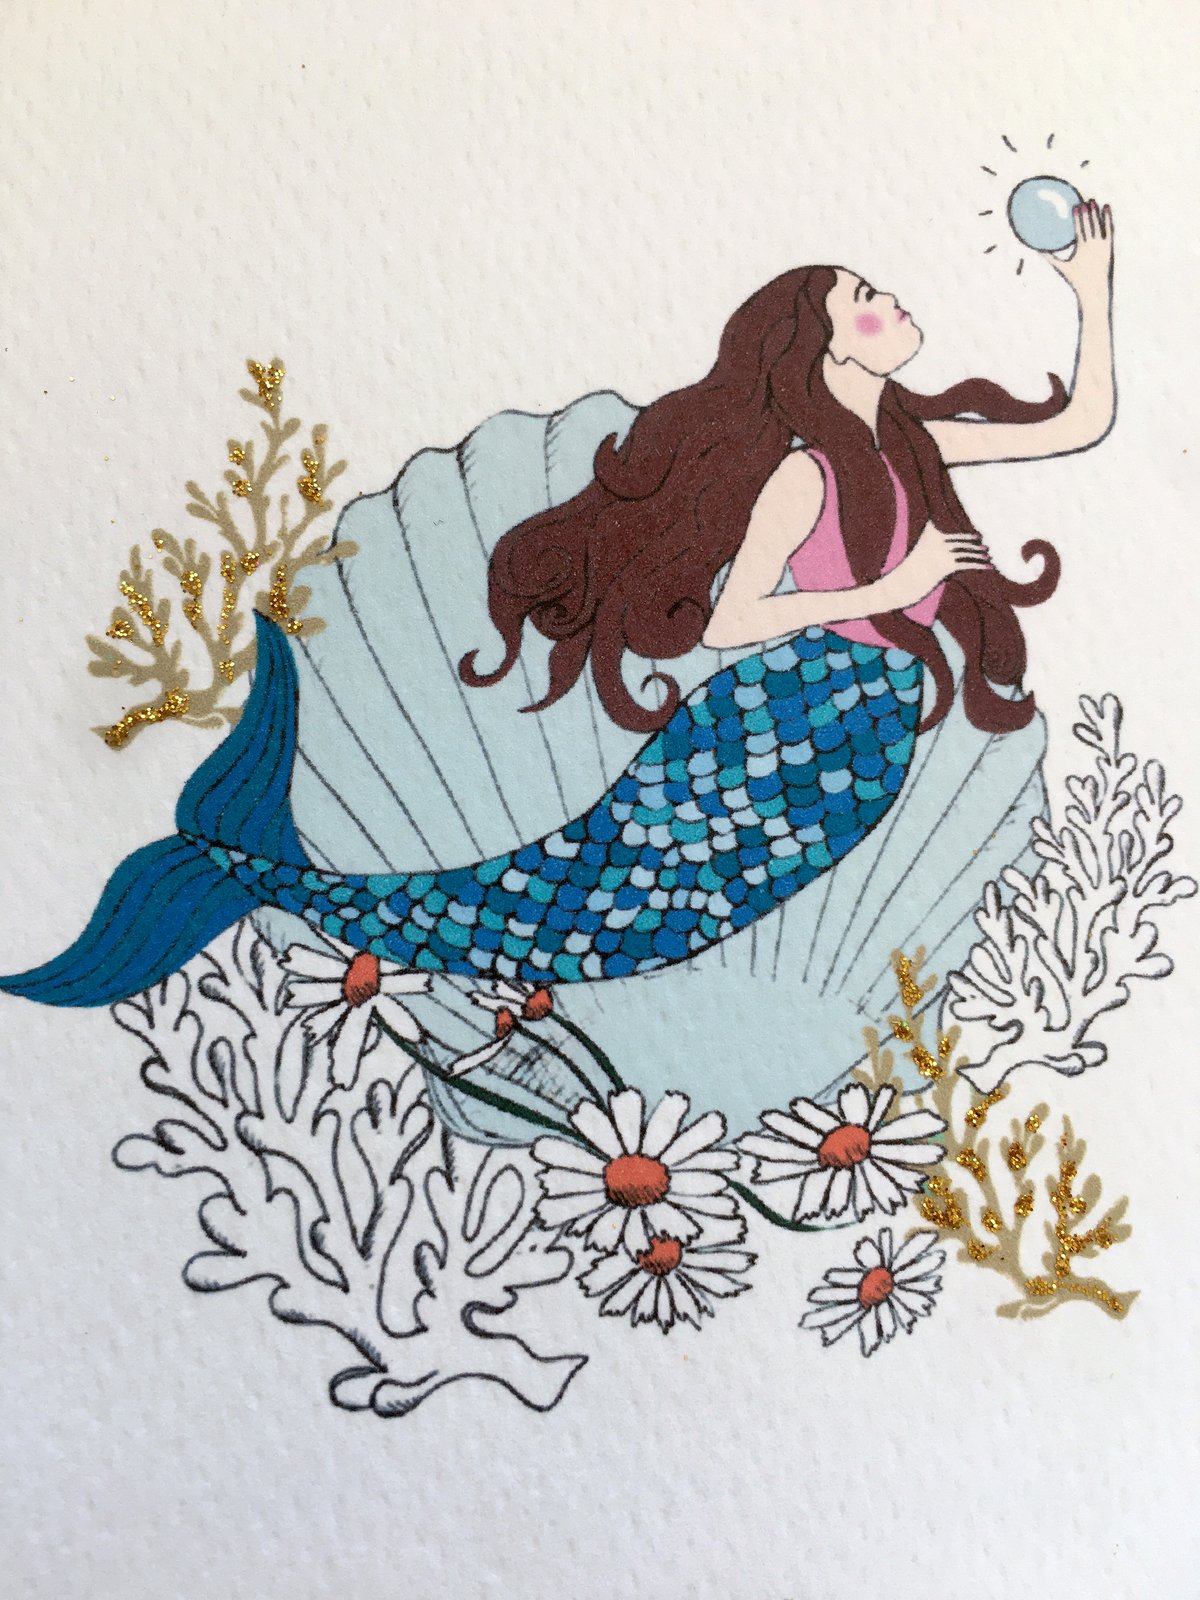 Mermaid Dream Happy Birthday Card 